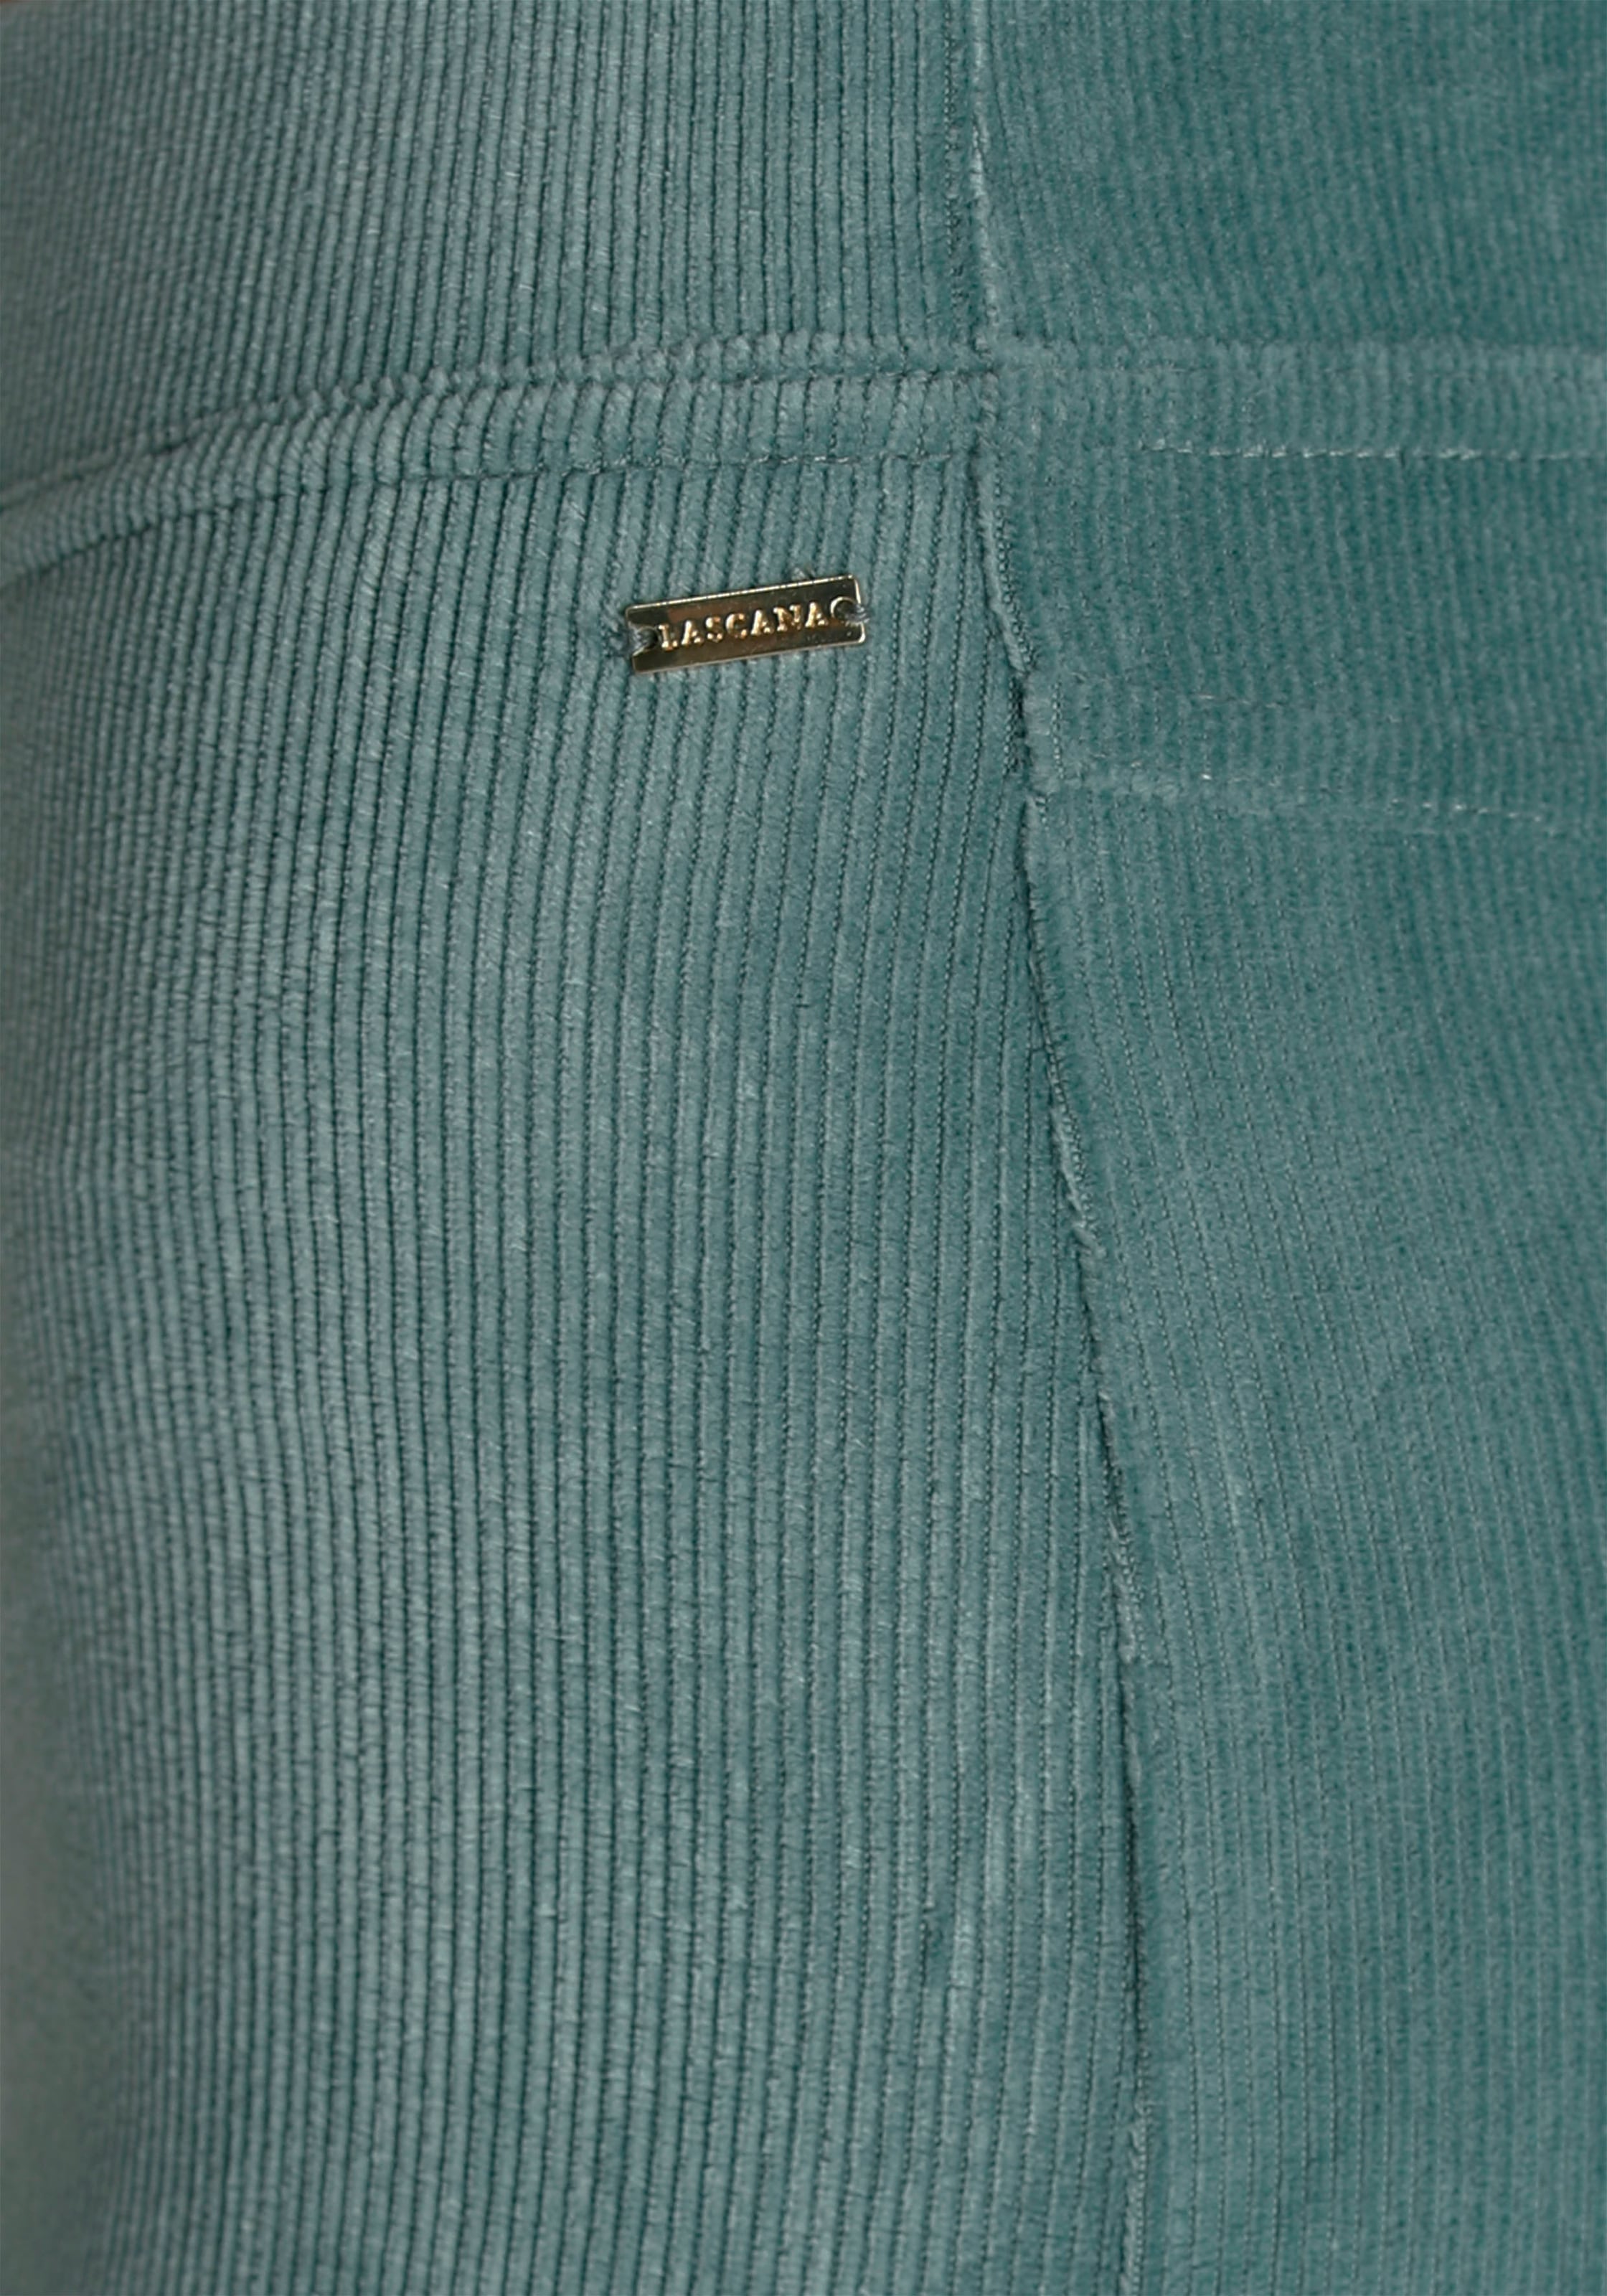 LASCANA Leggings, aus weichem Material in Cord-Optik, Loungewear